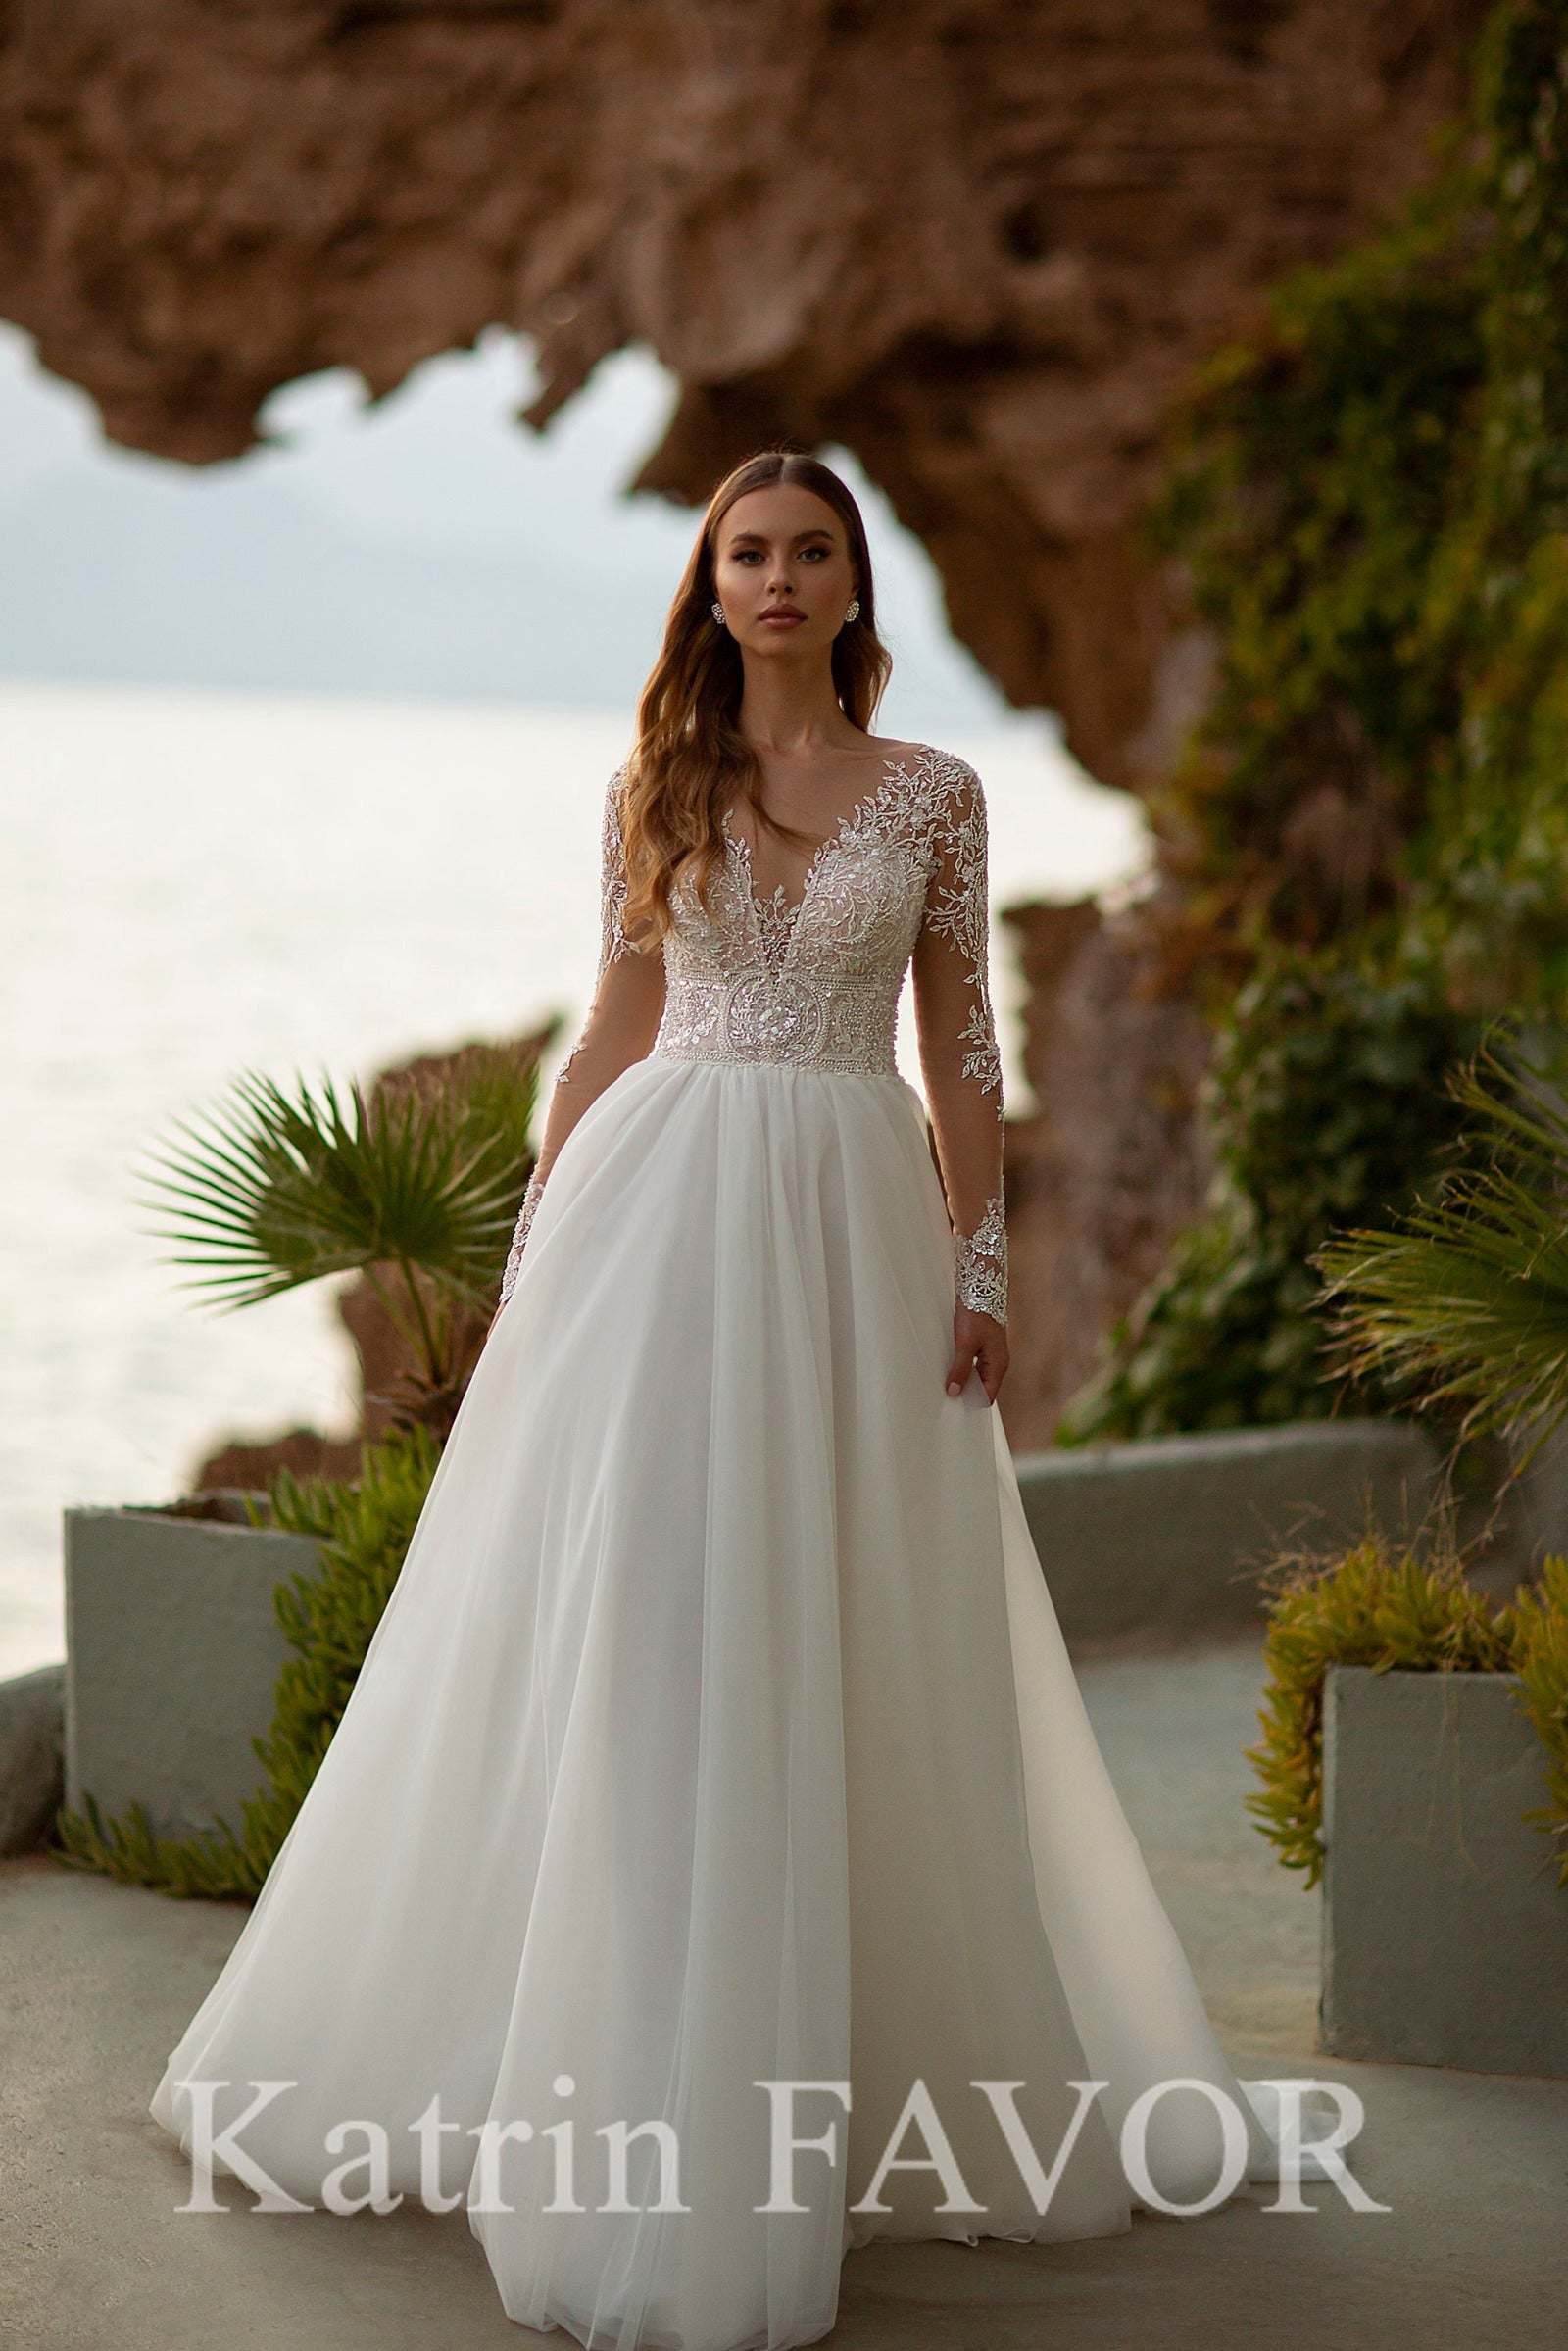 KatrinFAVORboutique-Lace top wedding dress A-line wedding gown